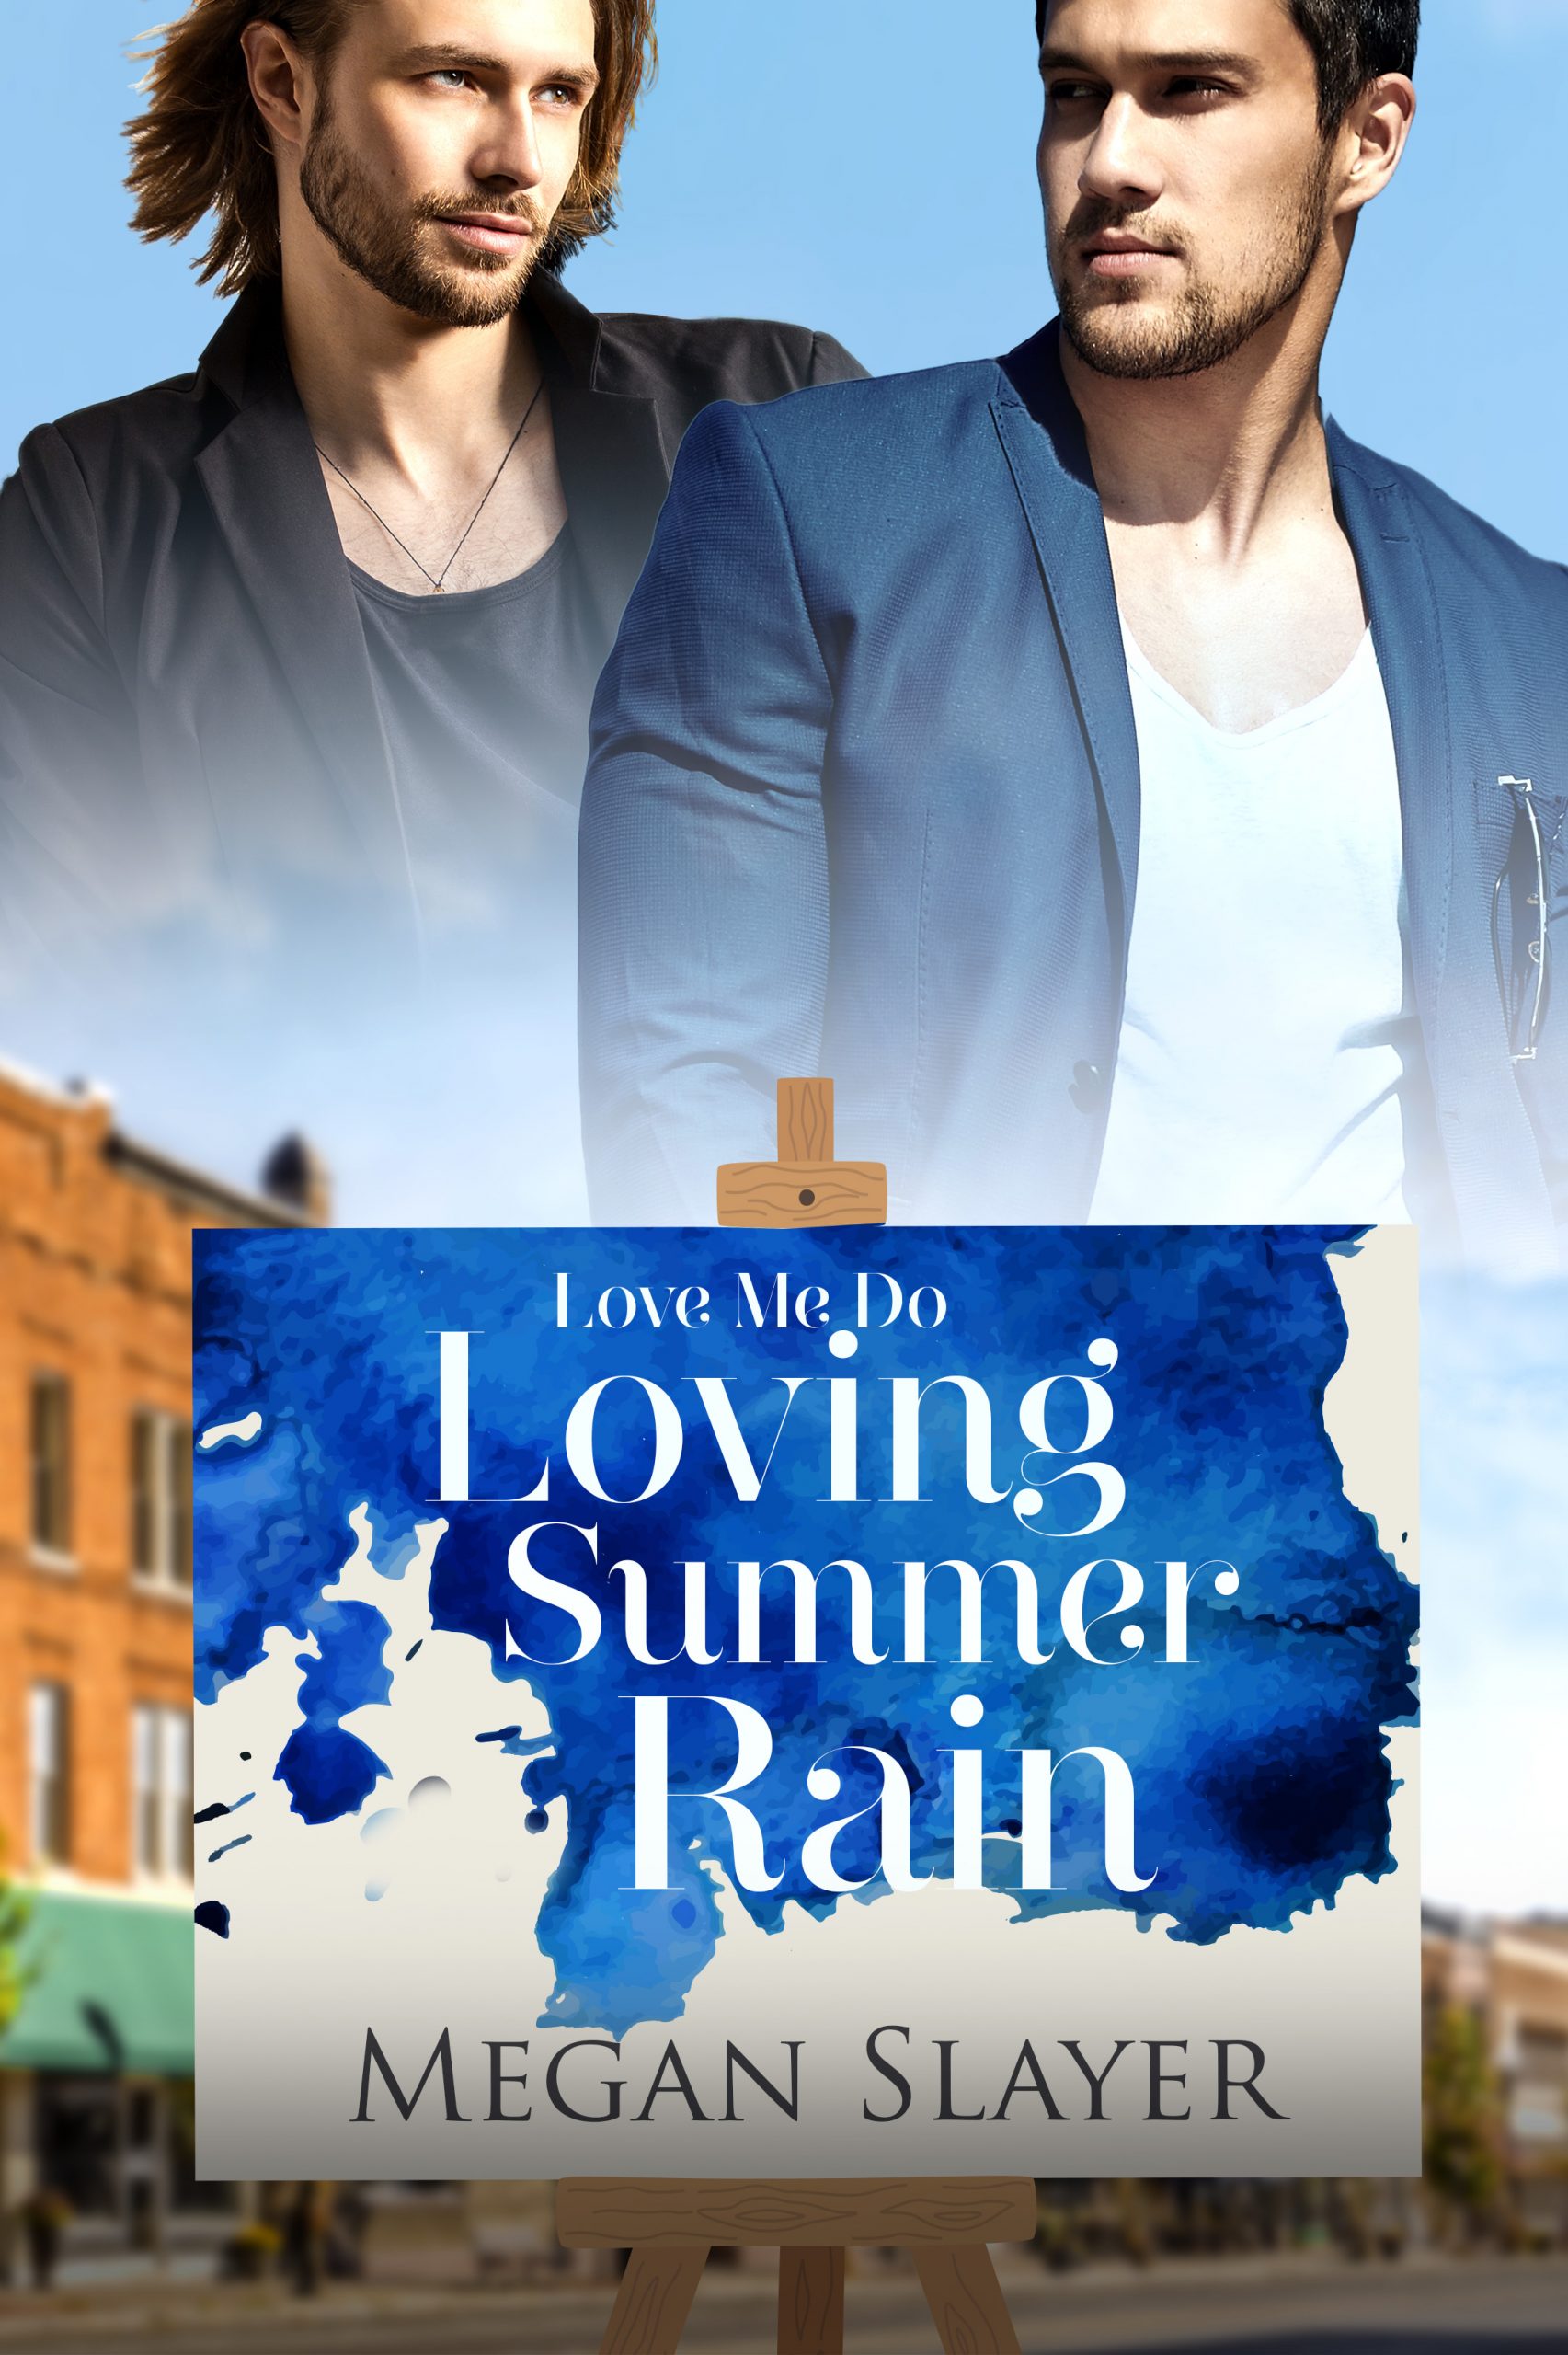 Loving Summer Rain by Megan Slayer